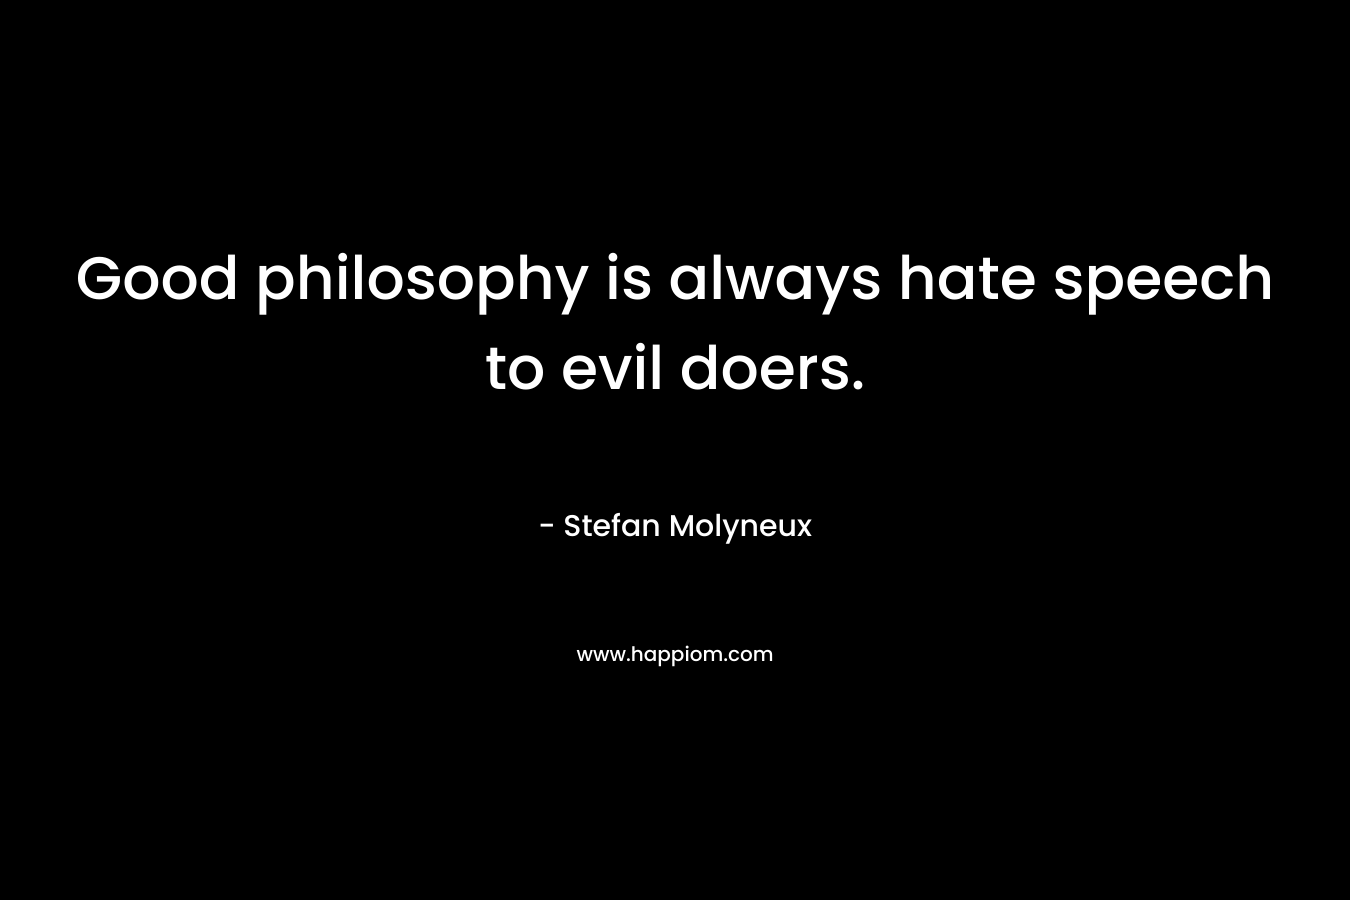 Good philosophy is always hate speech to evil doers.